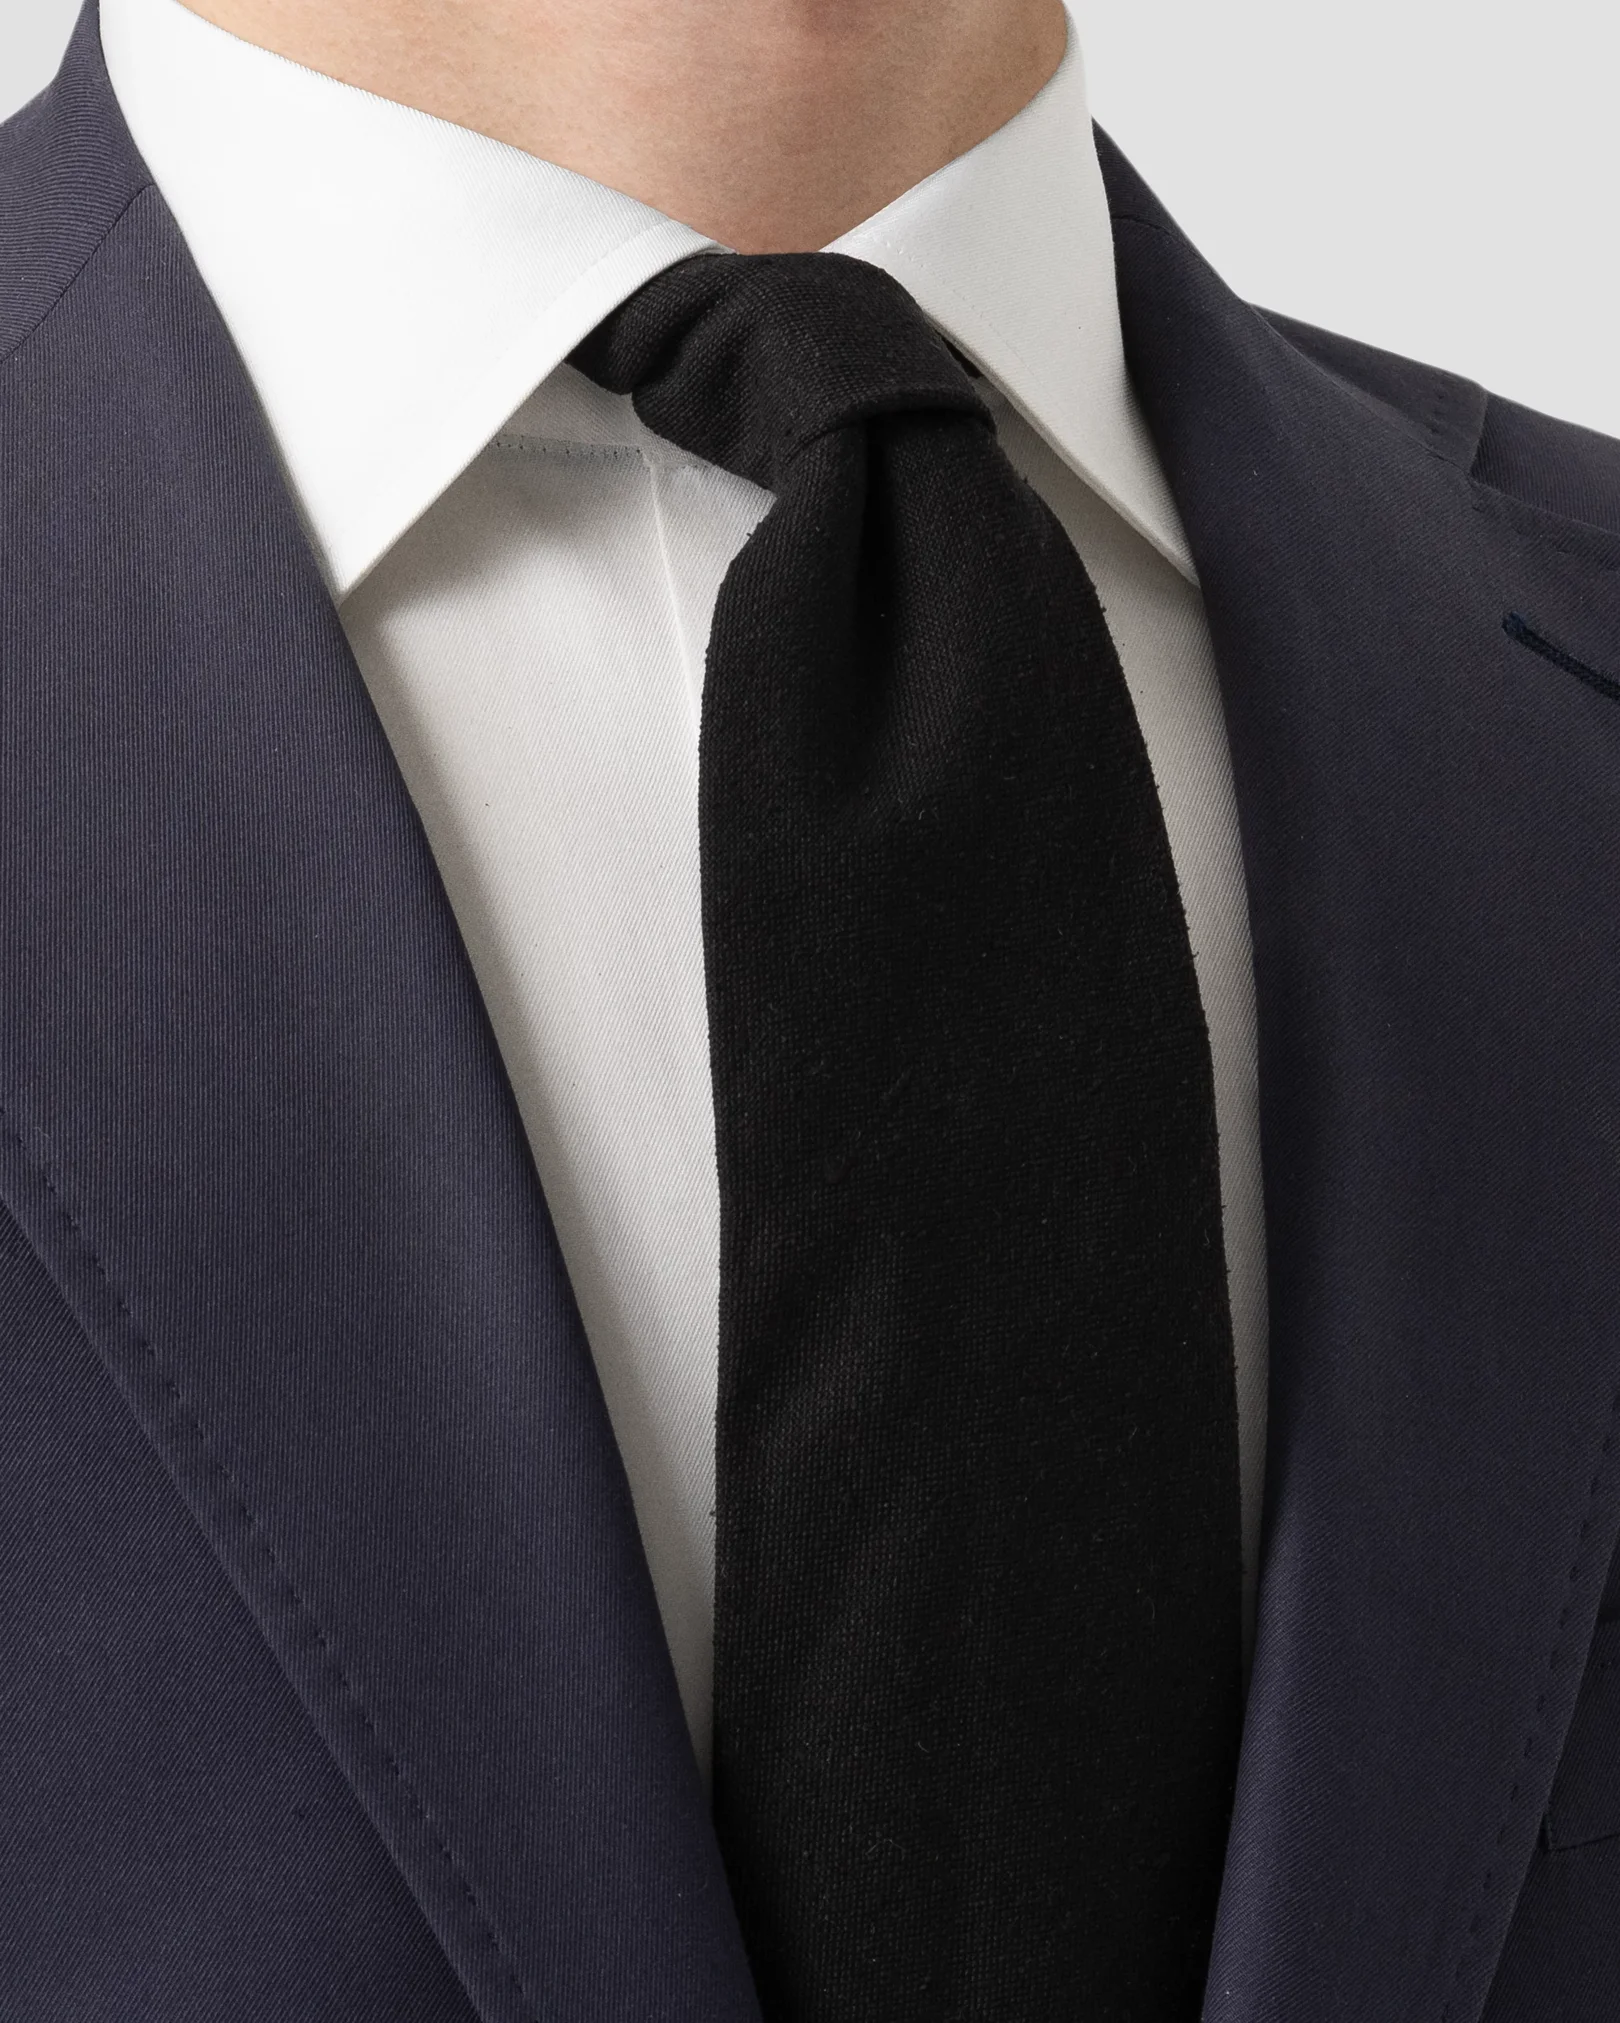 Eton - black accessories ties